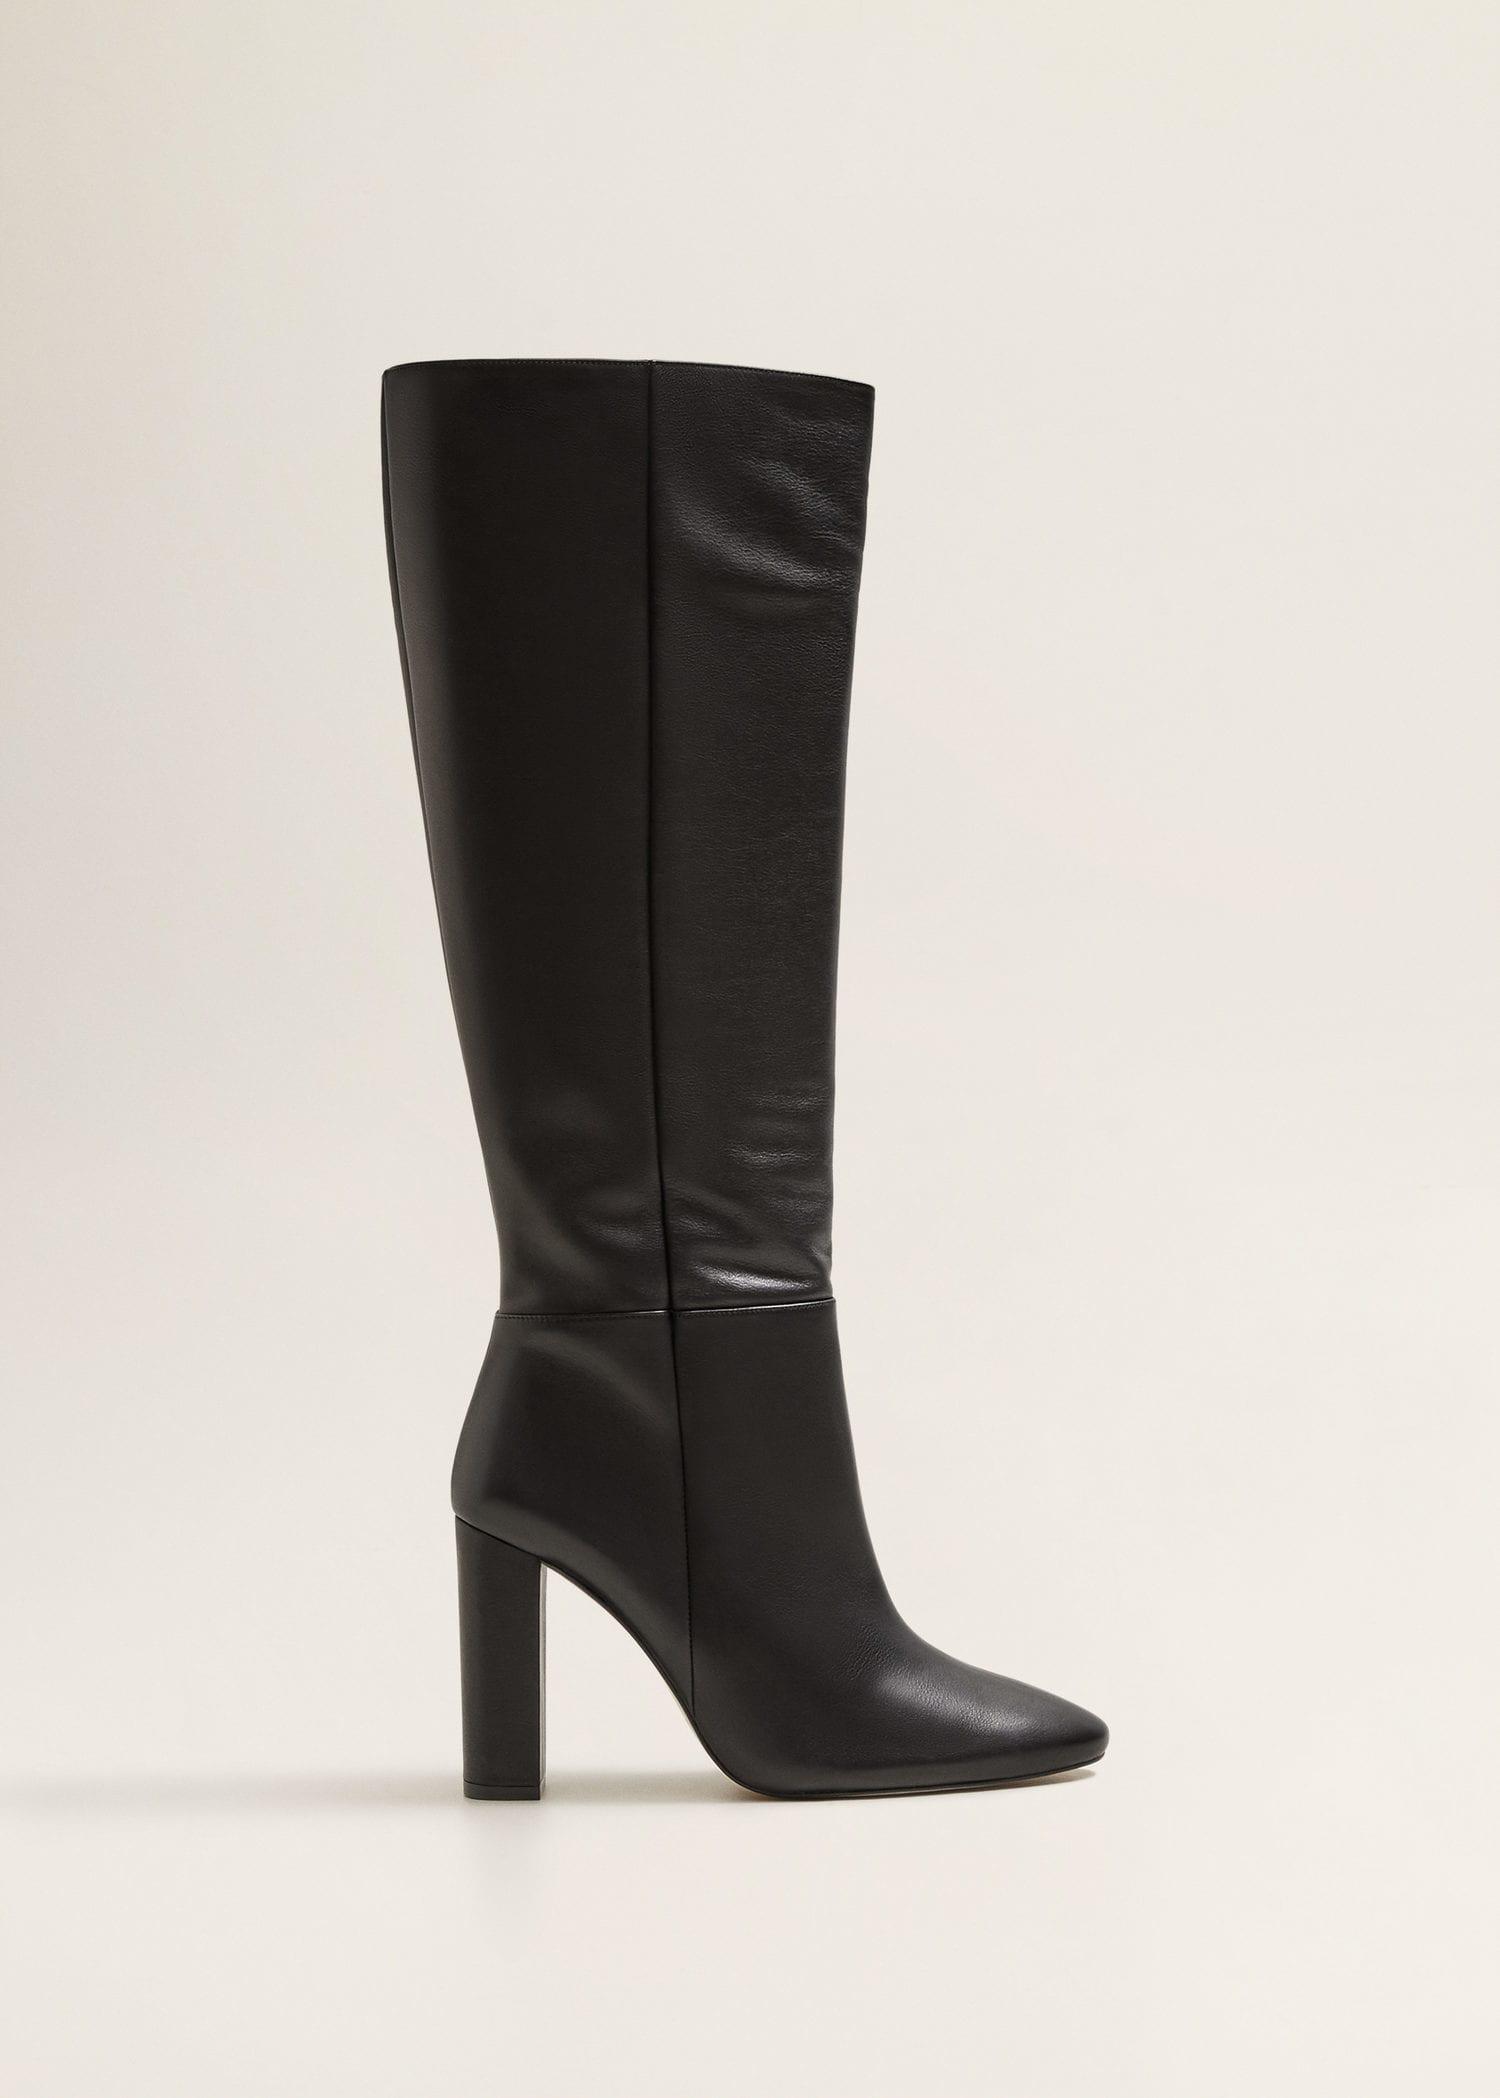 Mango Leather High-leg Boots in Black - Lyst